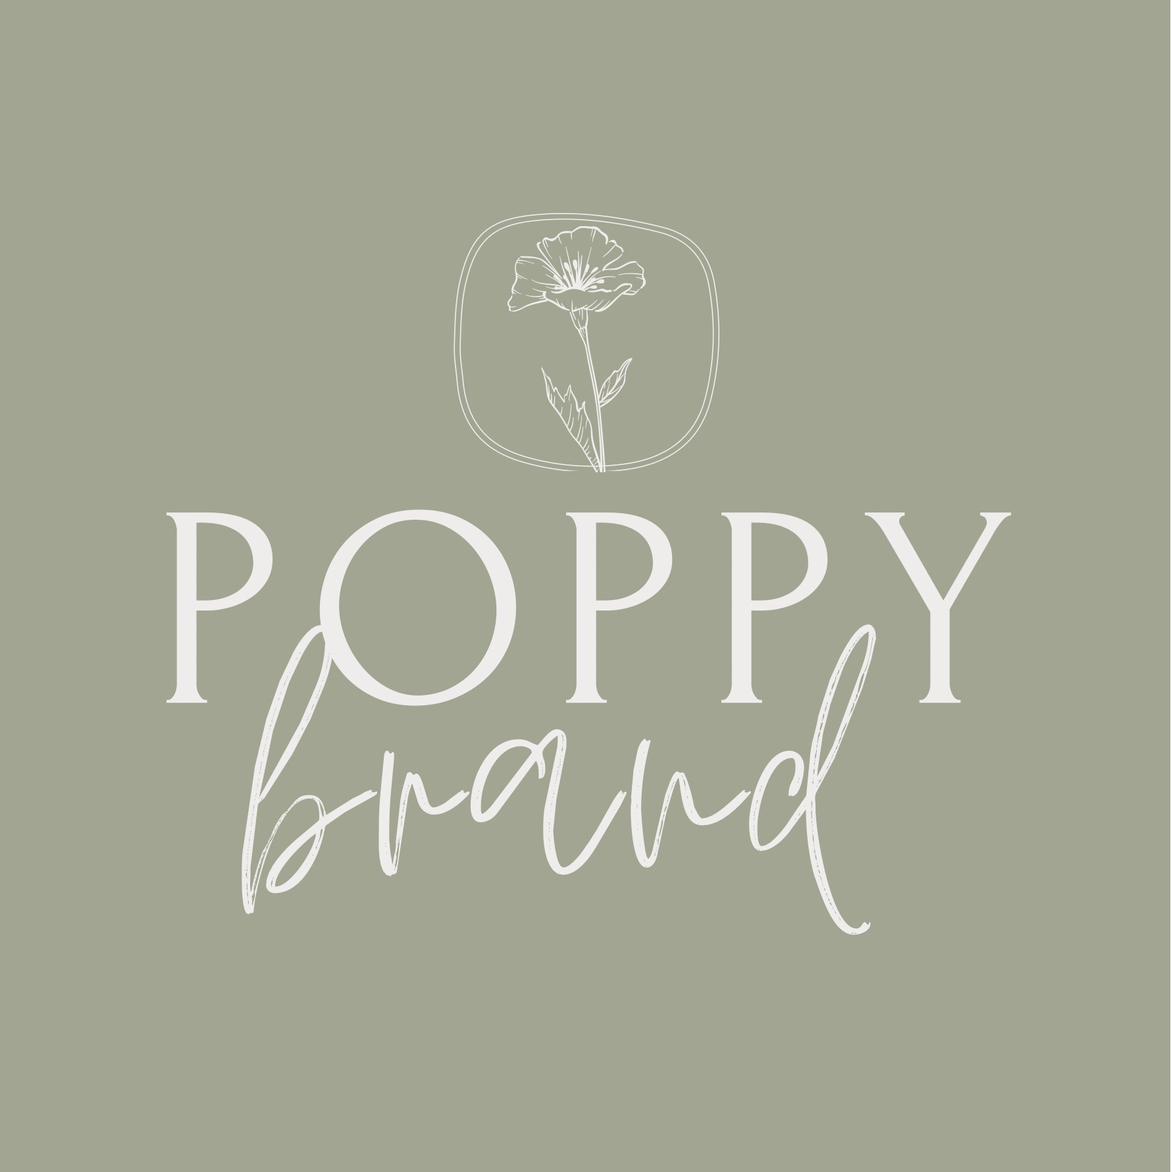 Poppy's images